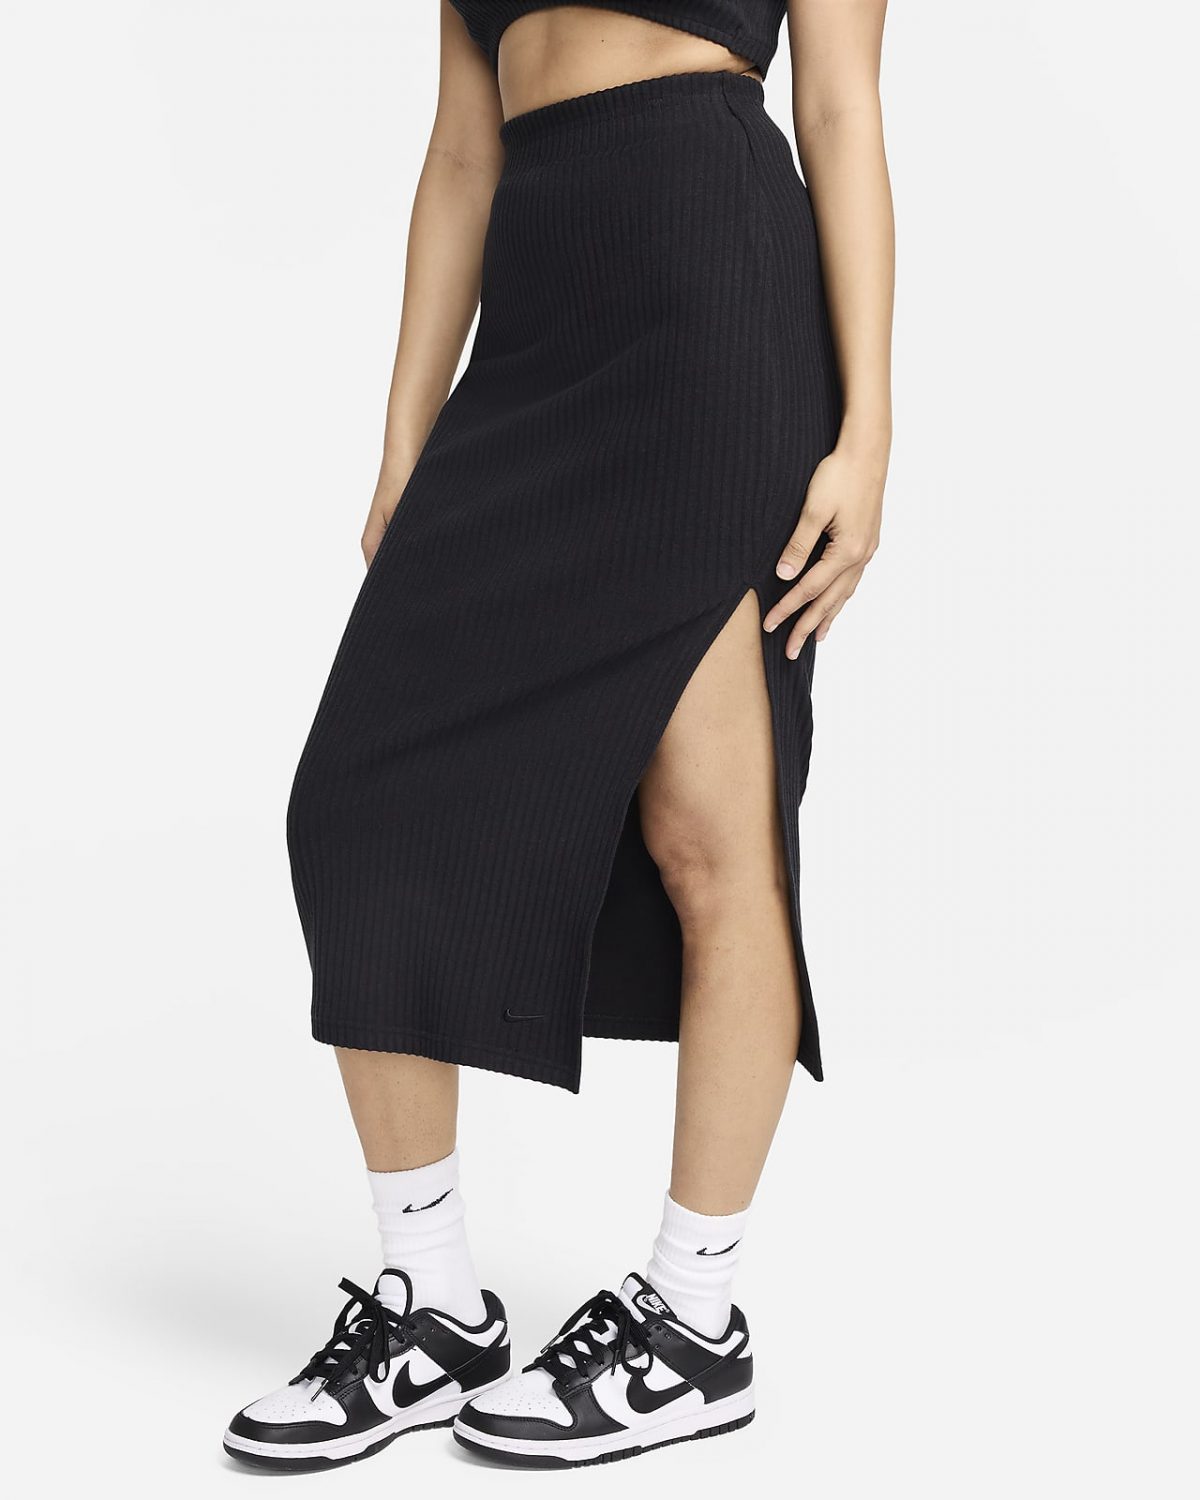 Женская юбка Nike Sportswear Chill Knit черная фото